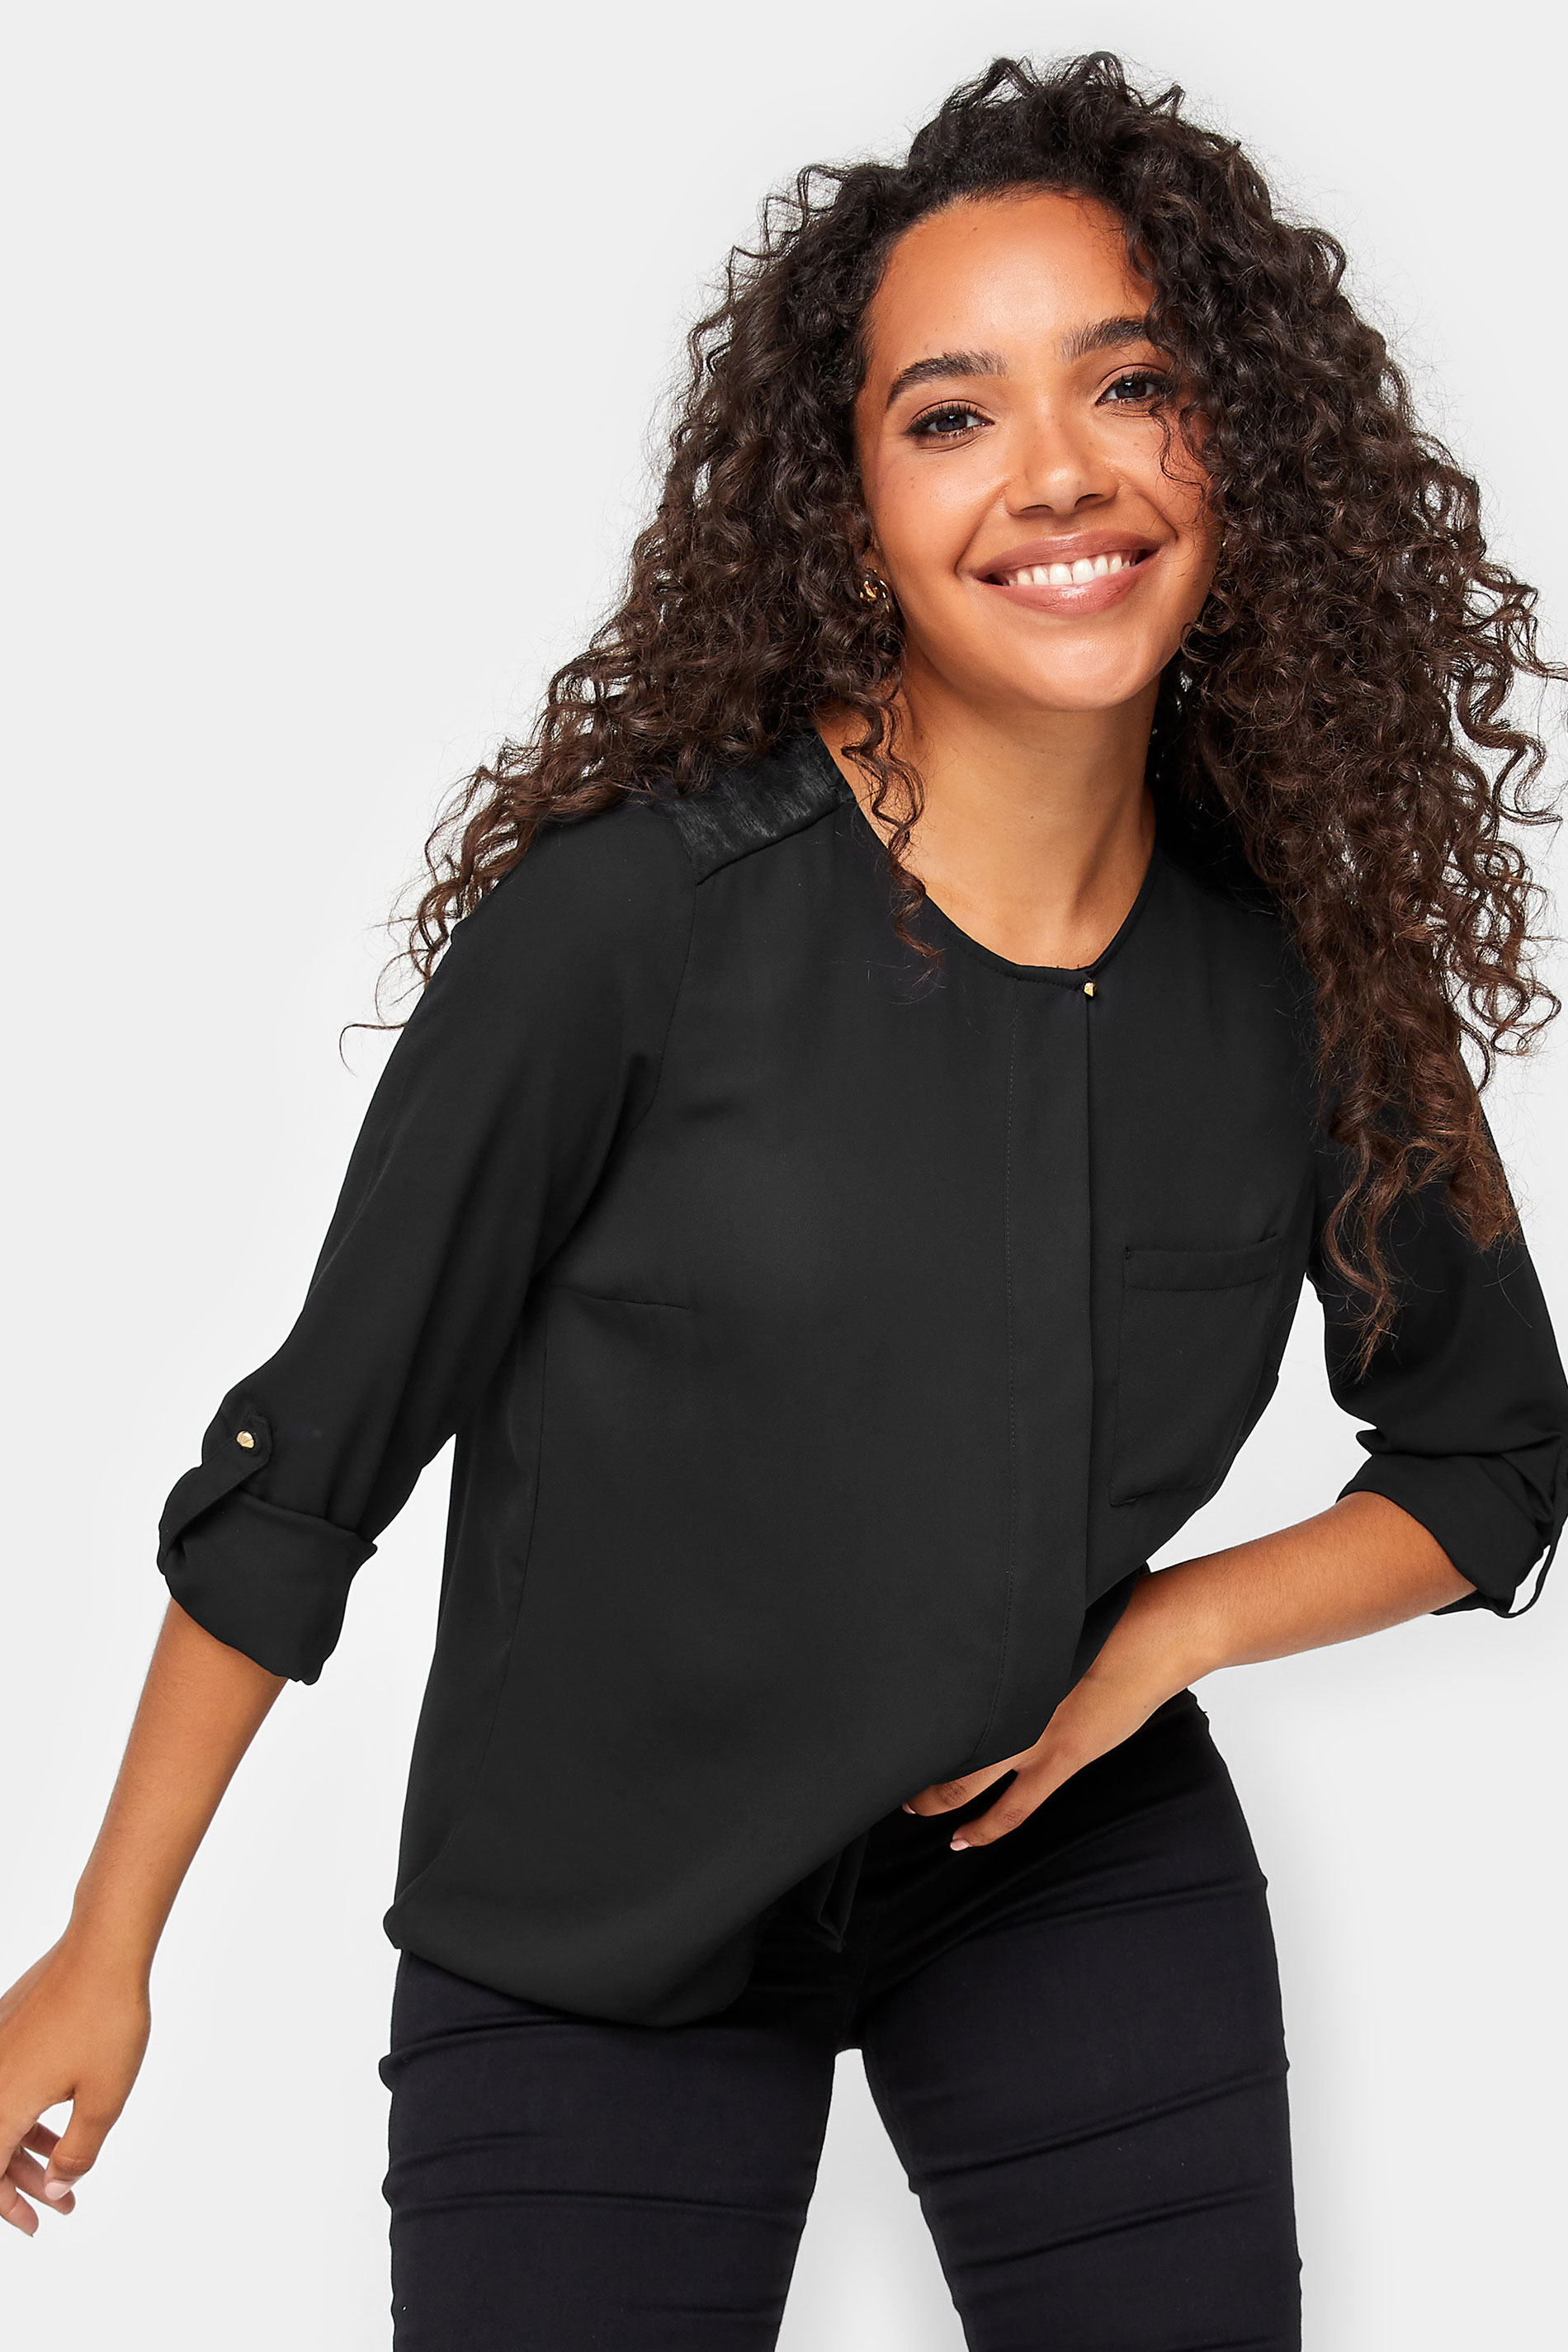 M&Co Black Satin Contrast Panel Shirt | M&Co 1